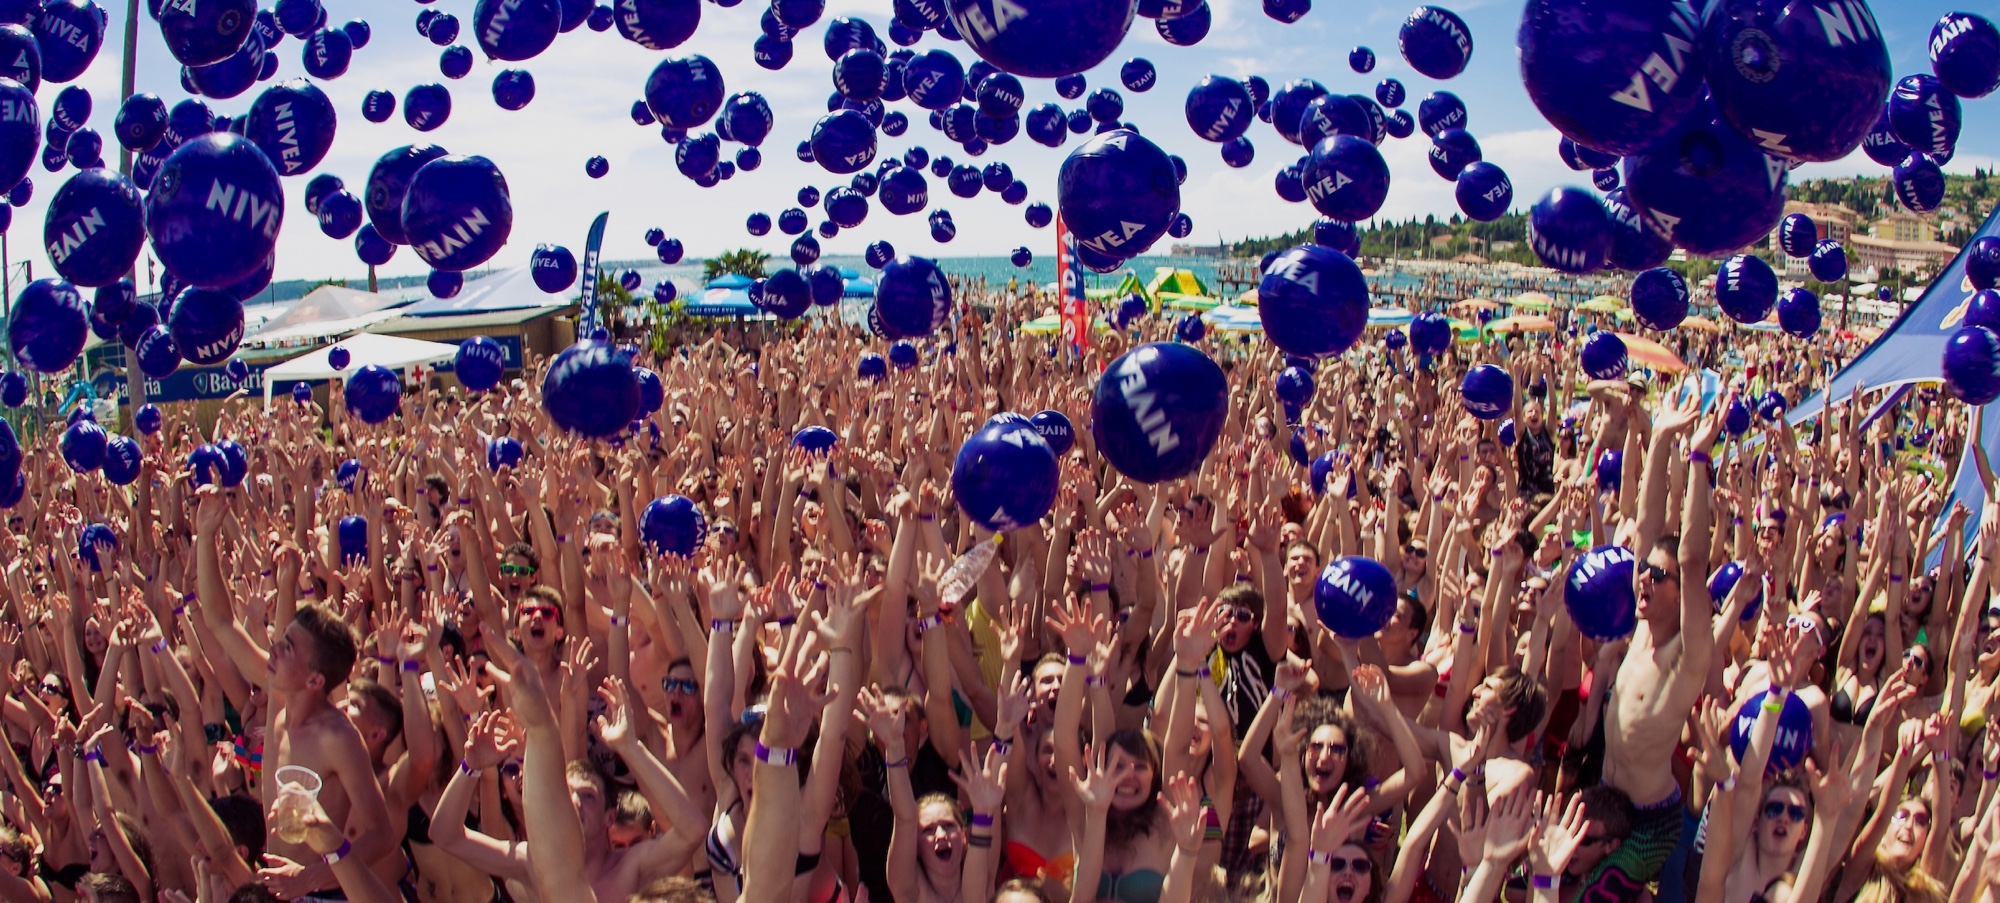 Strandballen festival ballen crowdballs - Nivea beach balls - Publi air